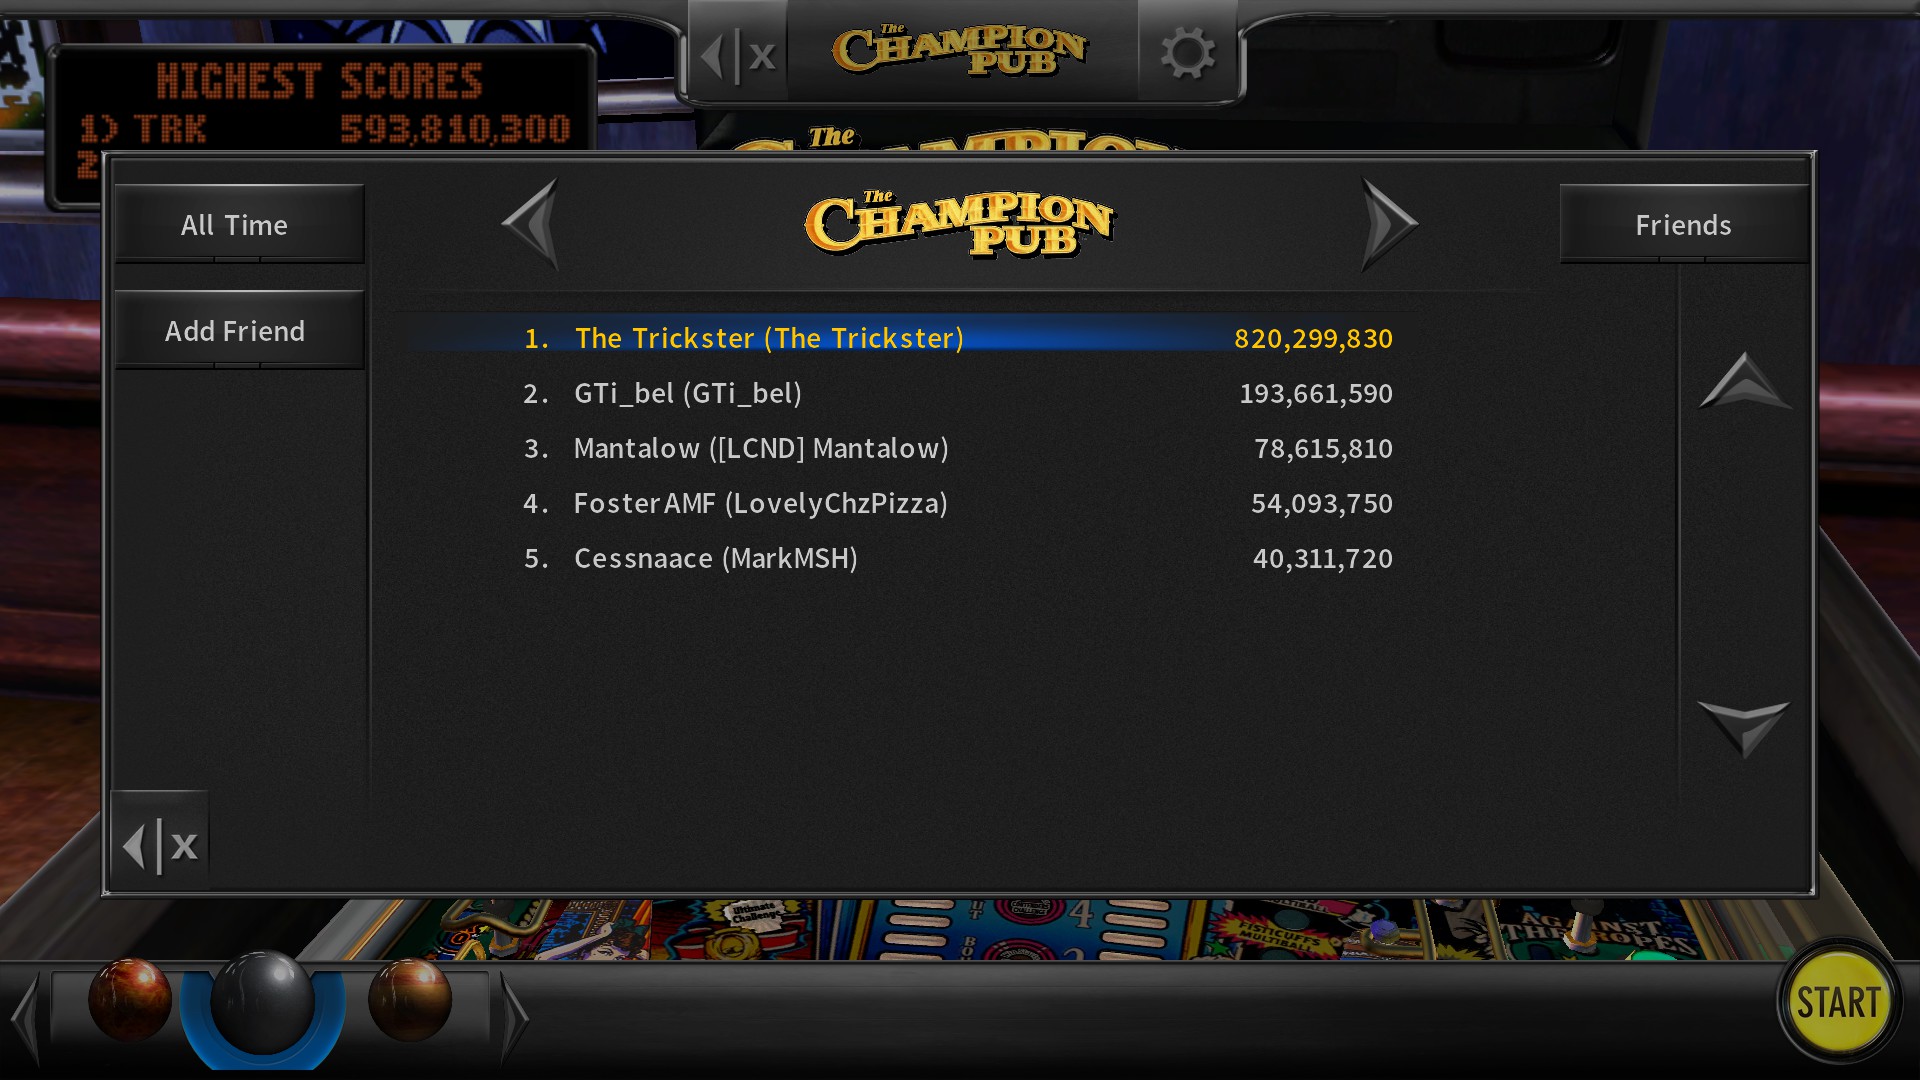 TheTrickster: Pinball Arcade: The Champion Pub (PC) 820,299,830 points on 2016-11-18 22:56:19